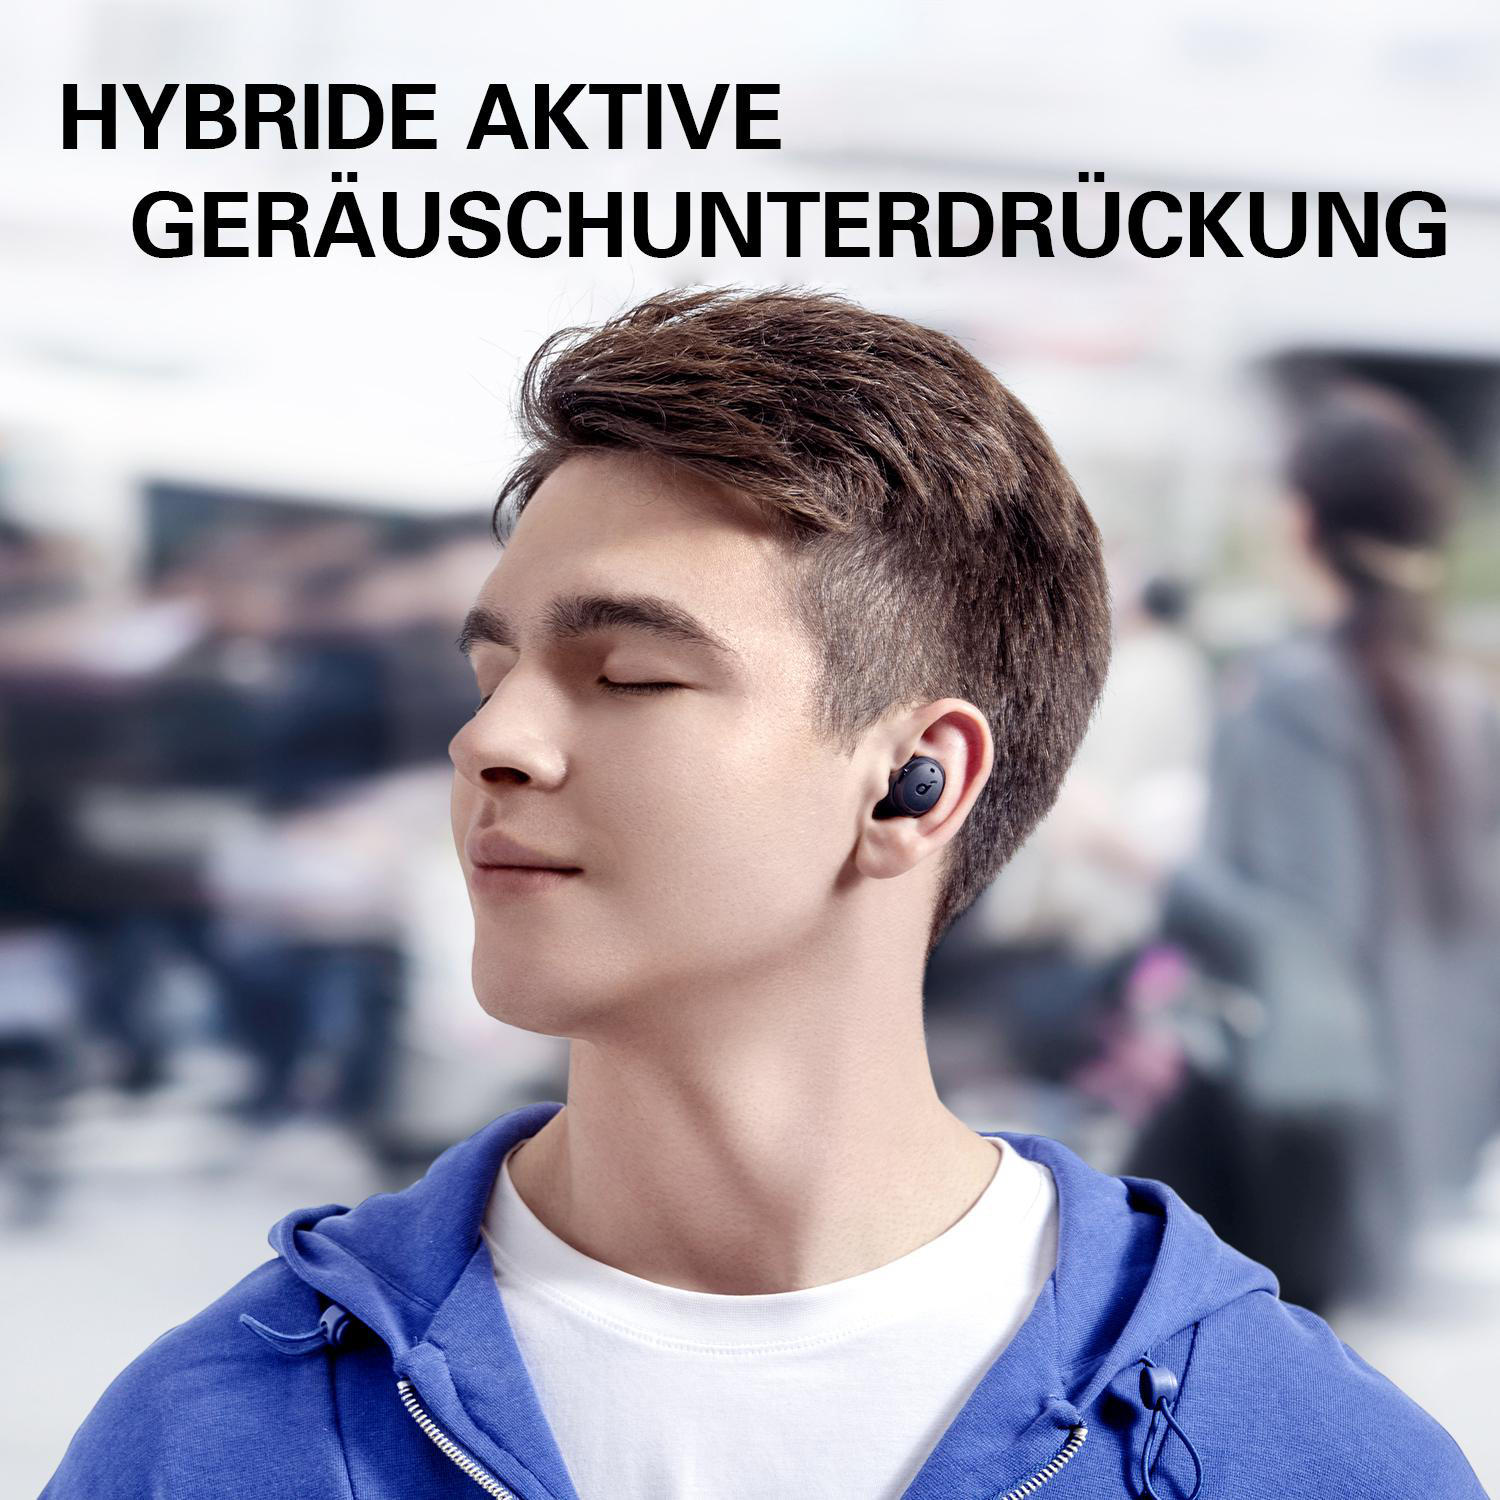 Life BY SOUNDCORE Dot Kopfhörer Schwarz ANKER In-ear Bluetooth Soundcore 3I,